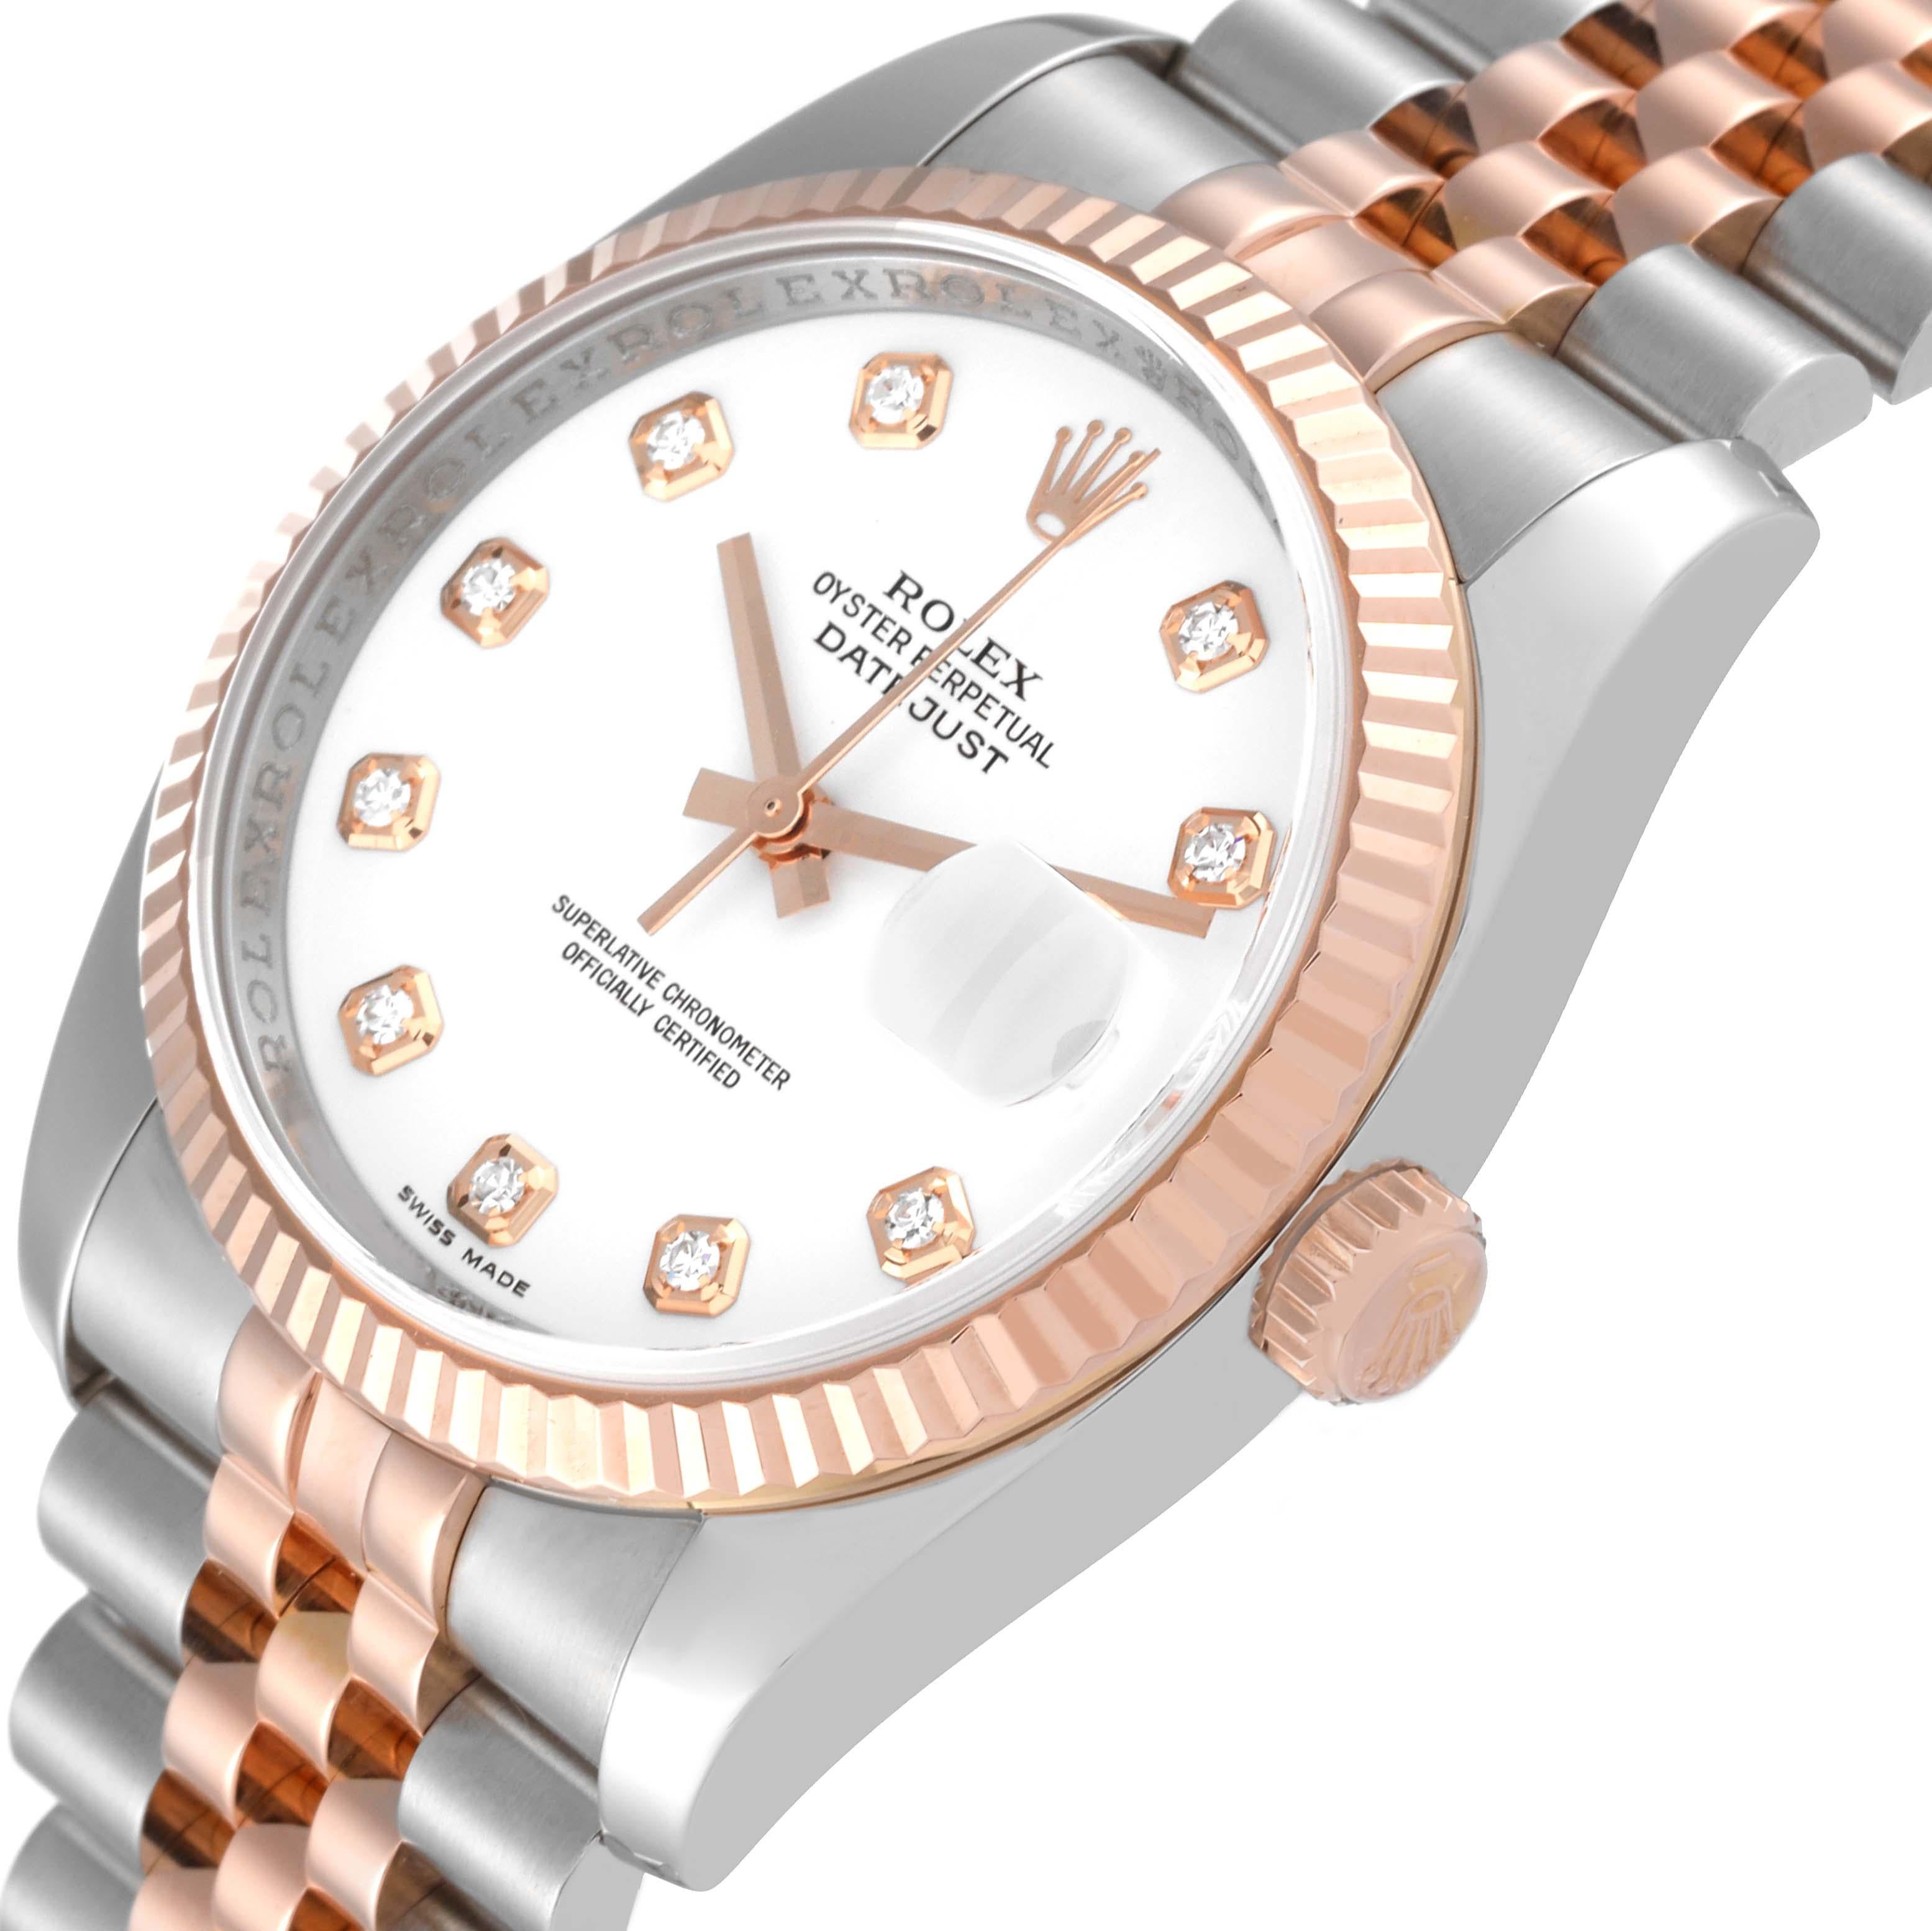 Rolex Datejust Steel Rose Gold White Diamond Dial Mens Watch 116231 1